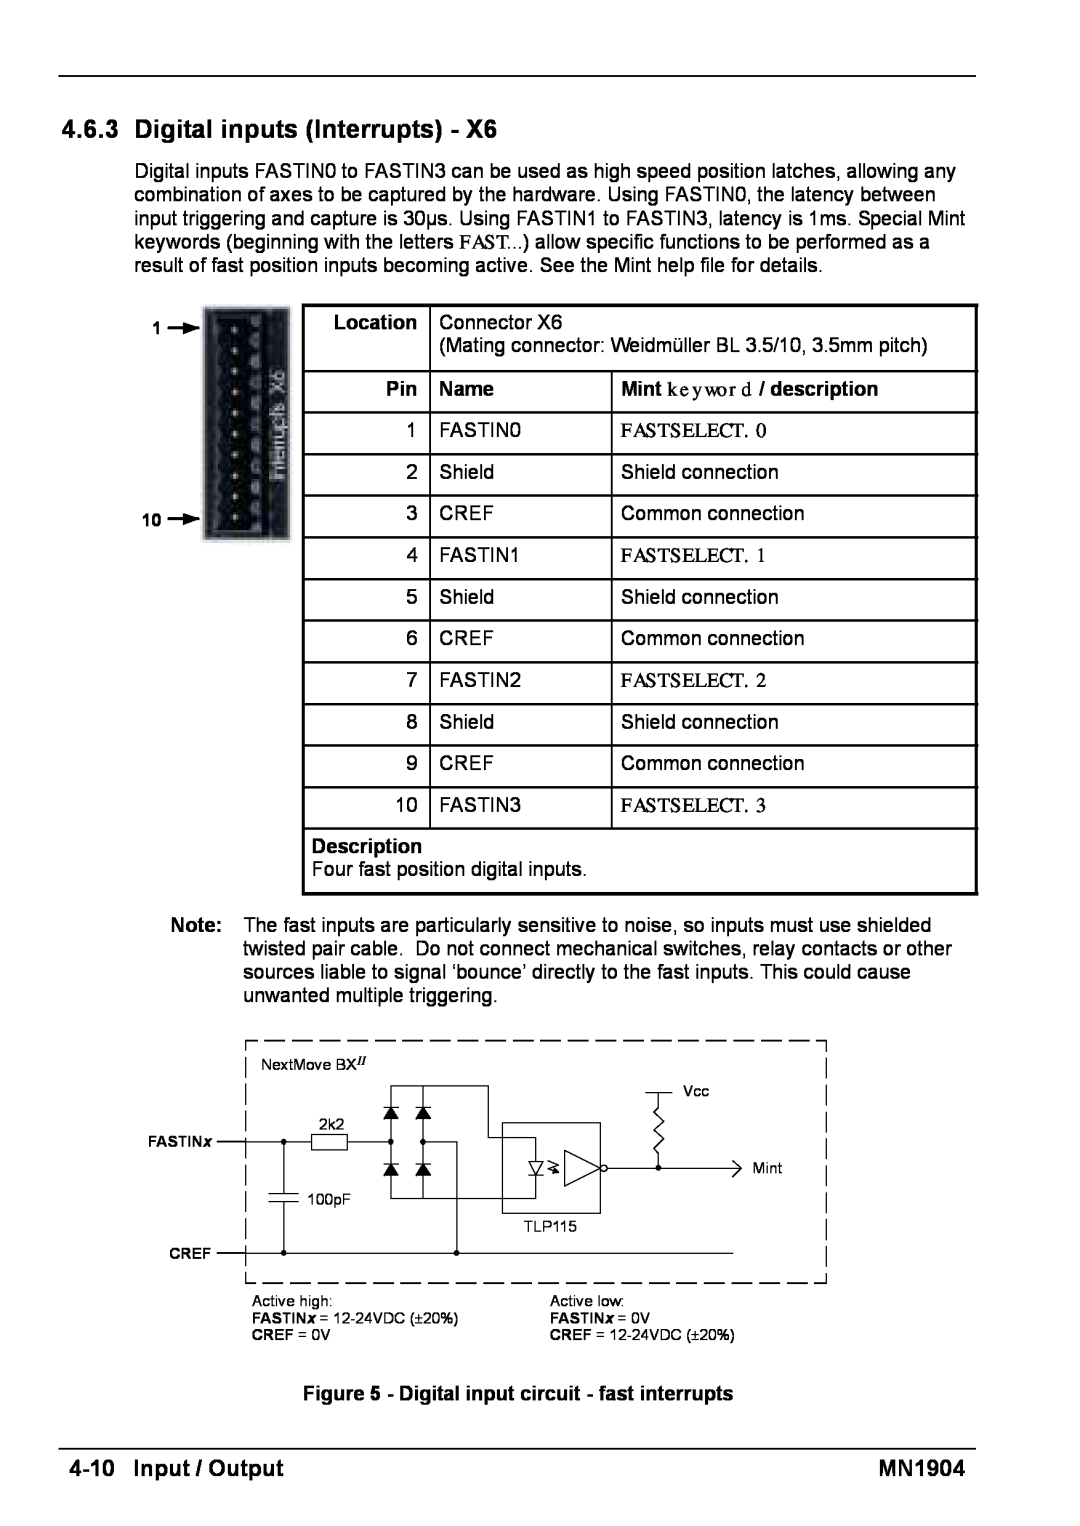 Baldor BXII installation manual Digital inputs Interrupts, 4-10Input / Output, MN1904 